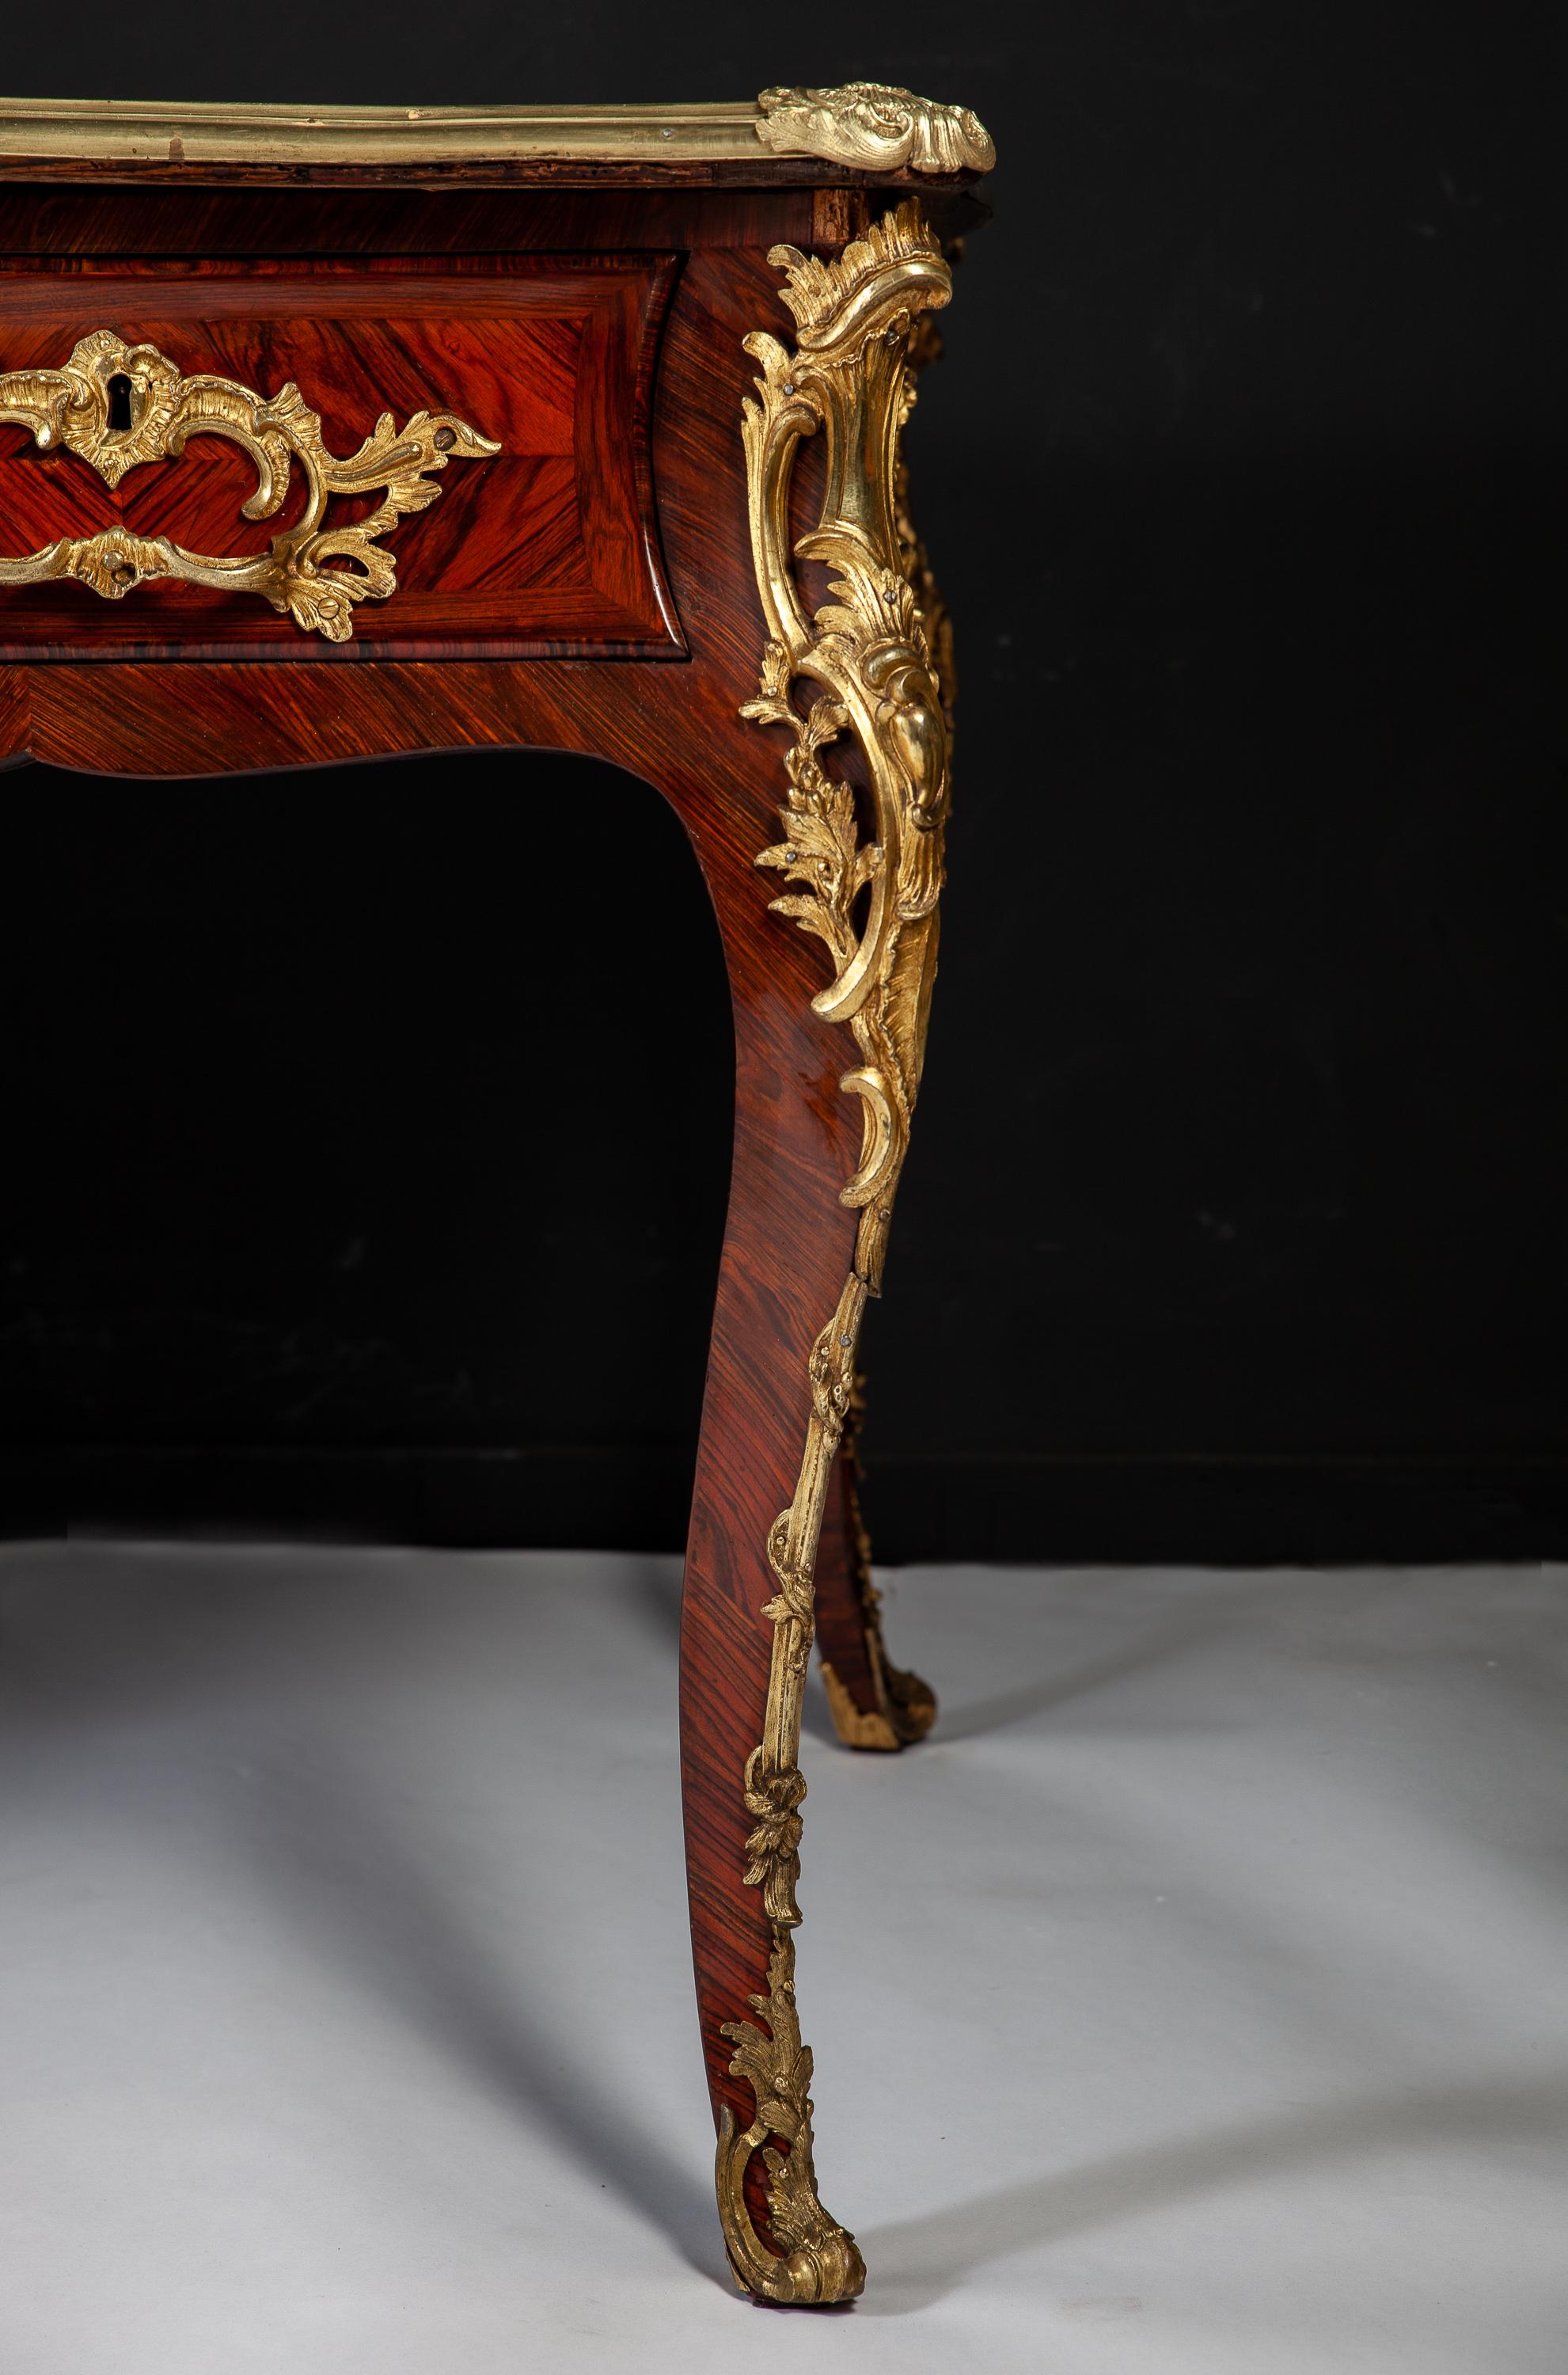 French 18th Century Louis XV Kingwood Gilt-Bronze Mounted  Bureau Plat Desk 1750 7